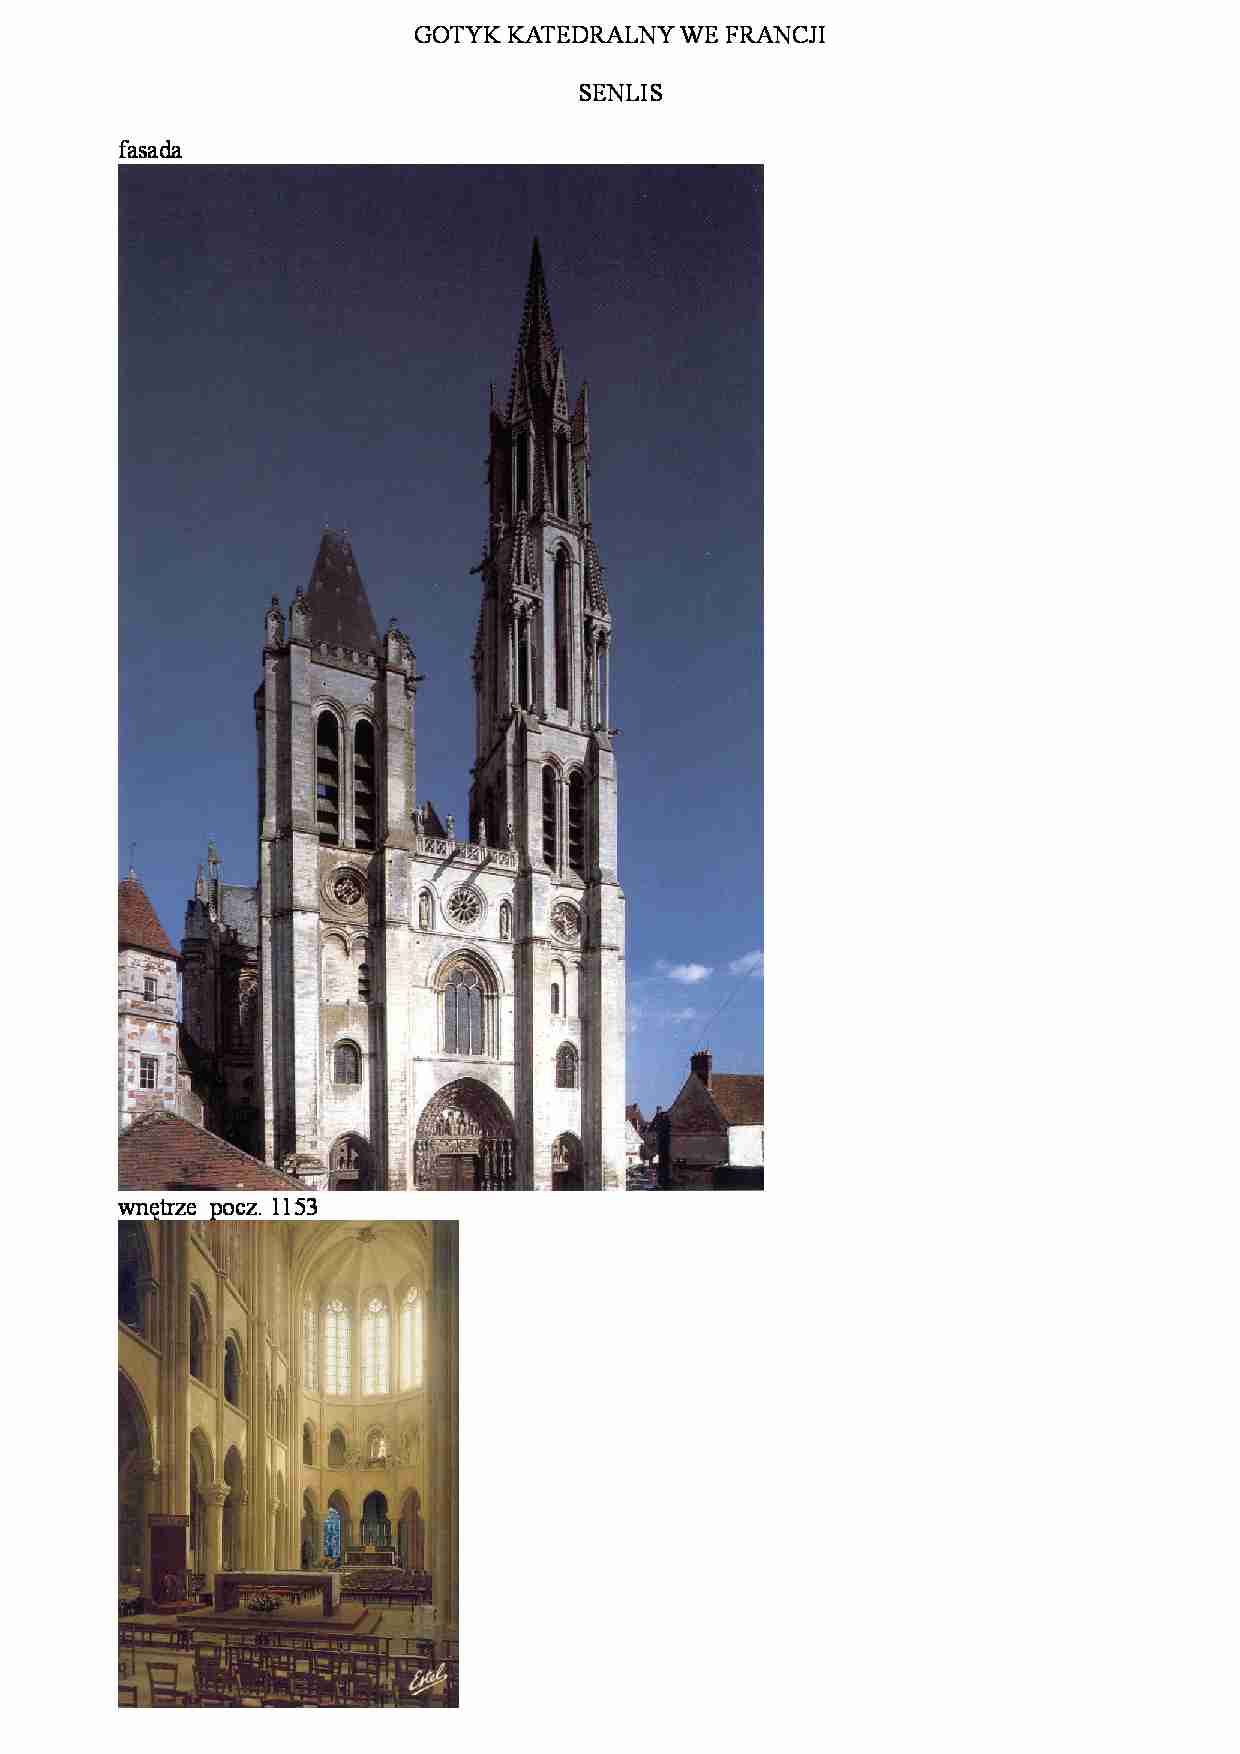 Gotyk katedralny we Francji-Senlis - strona 1